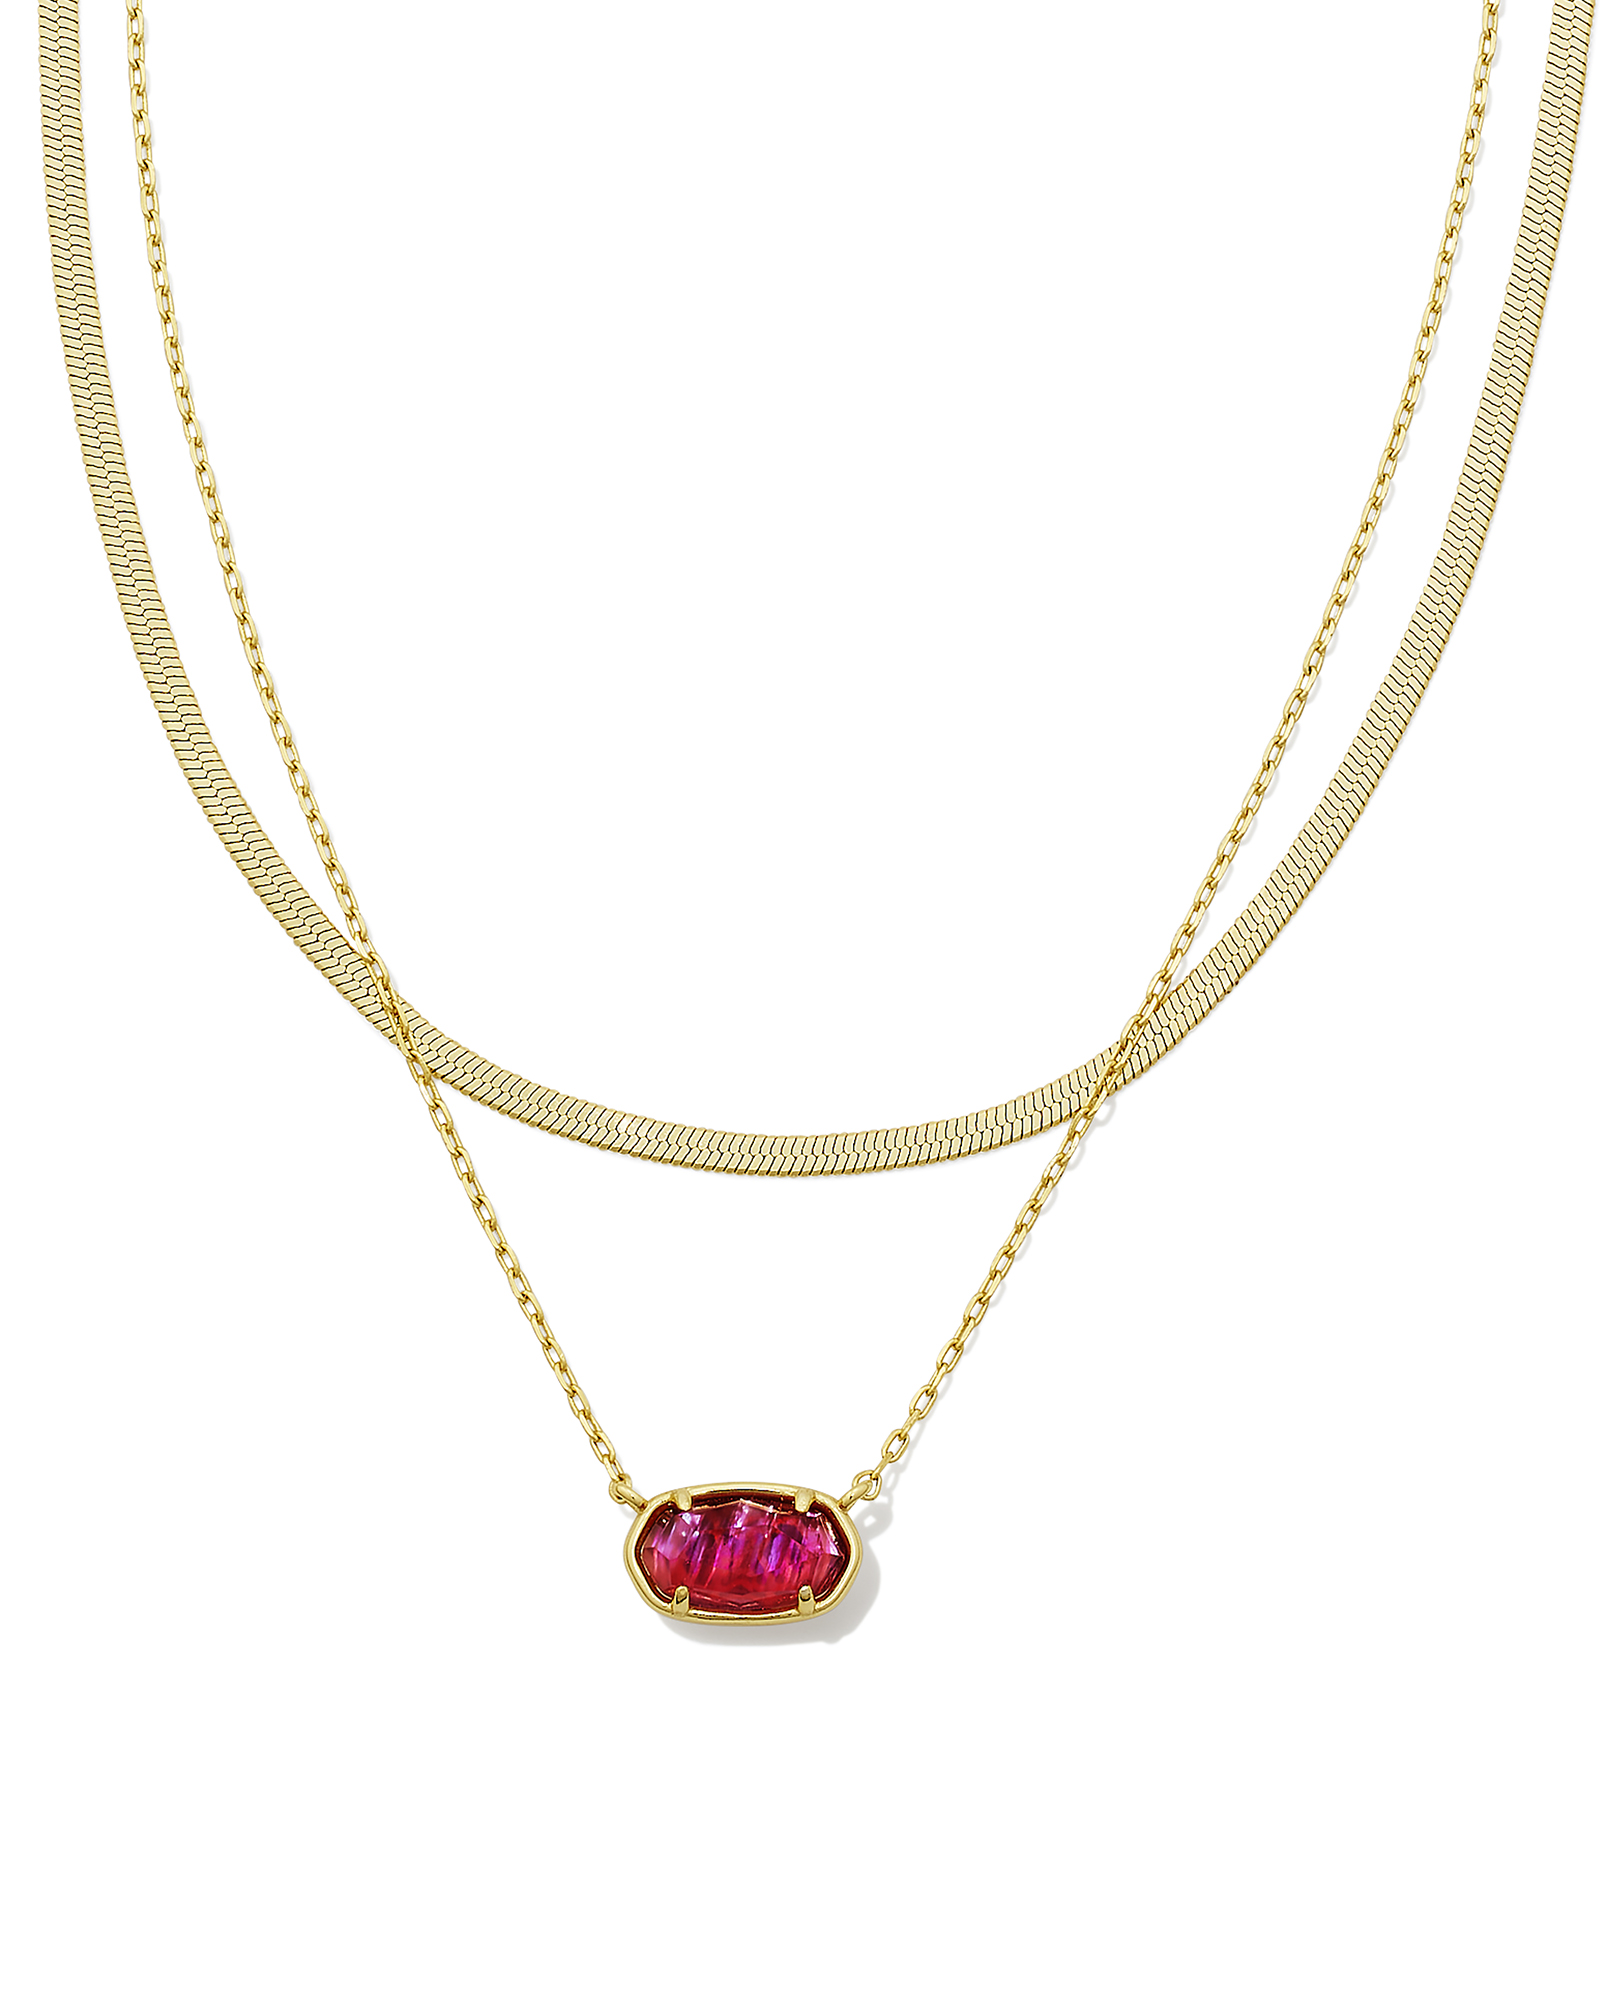 Golden Burgundy Statement Choker Necklace - Art Jewelry Women Accessories |  World Art Community